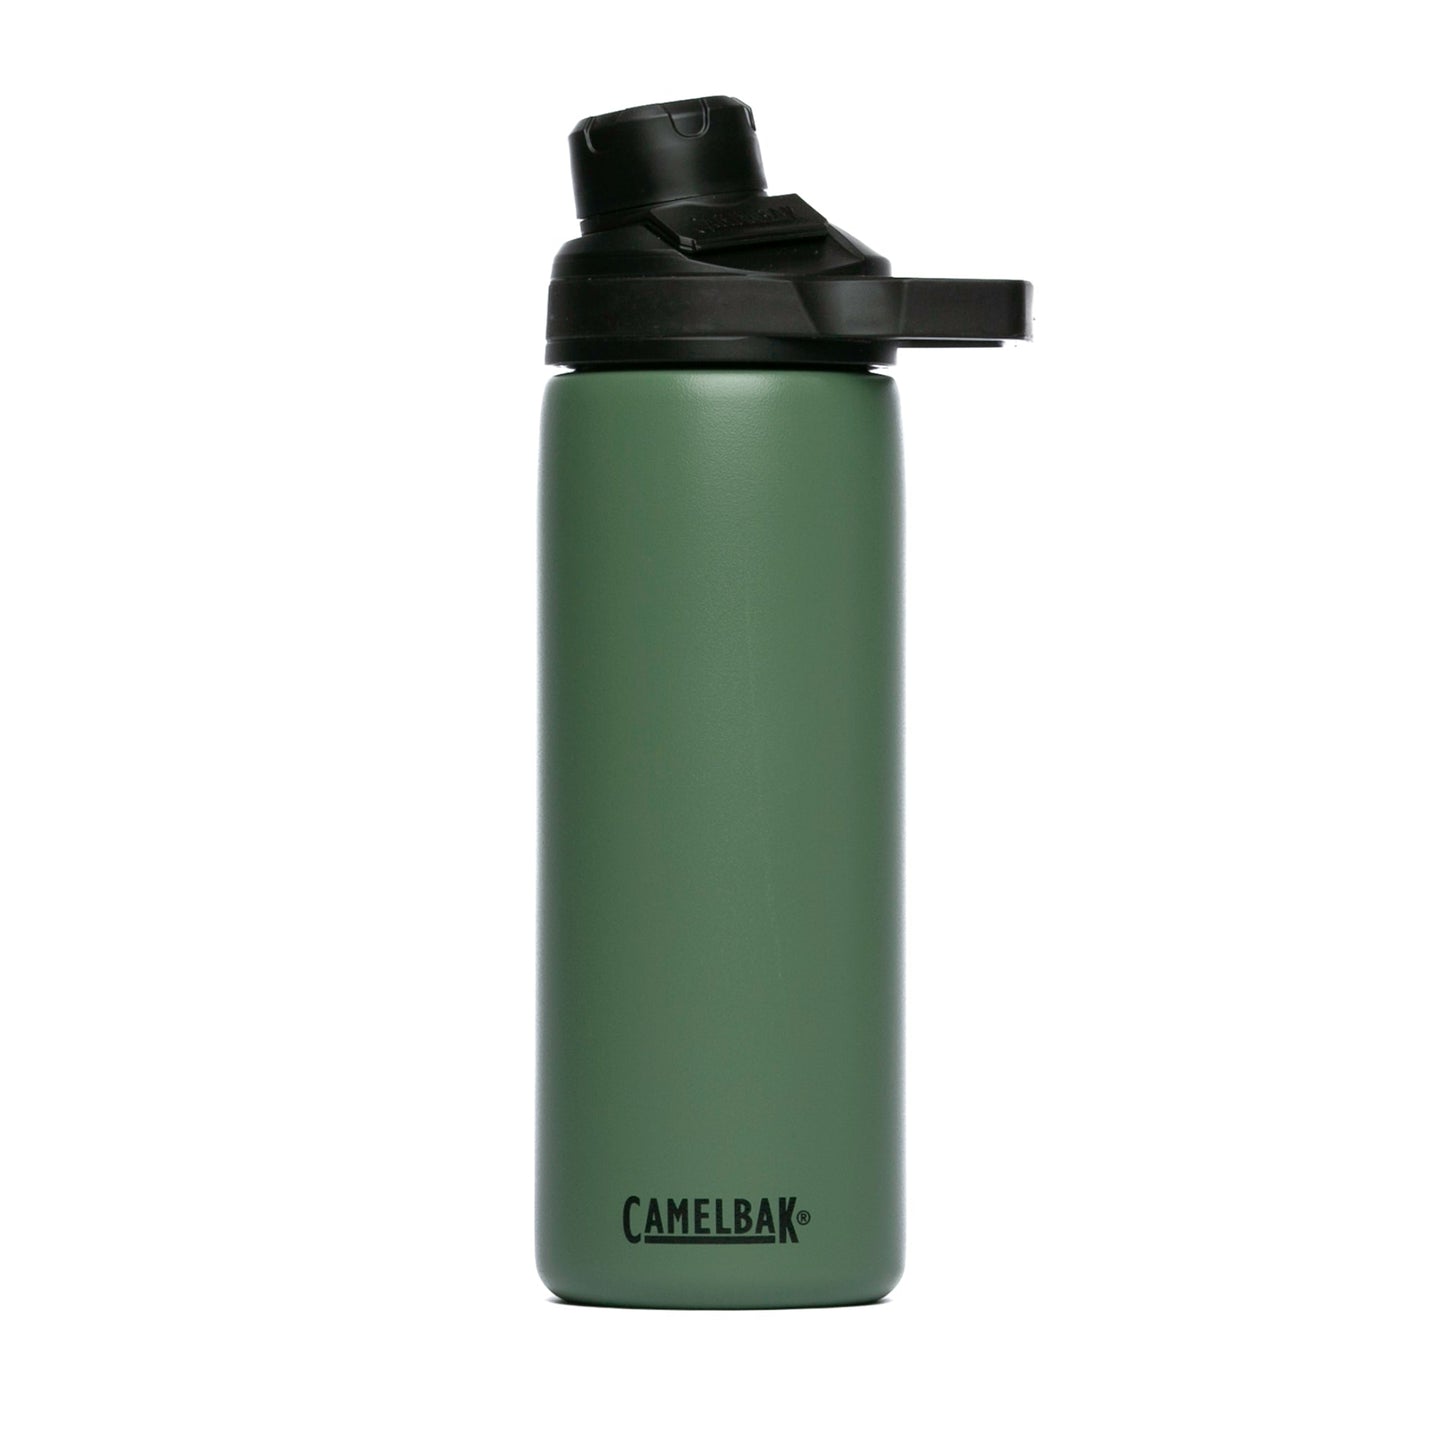 Personalized CamelBak 20oz Chute® Mag Water Bottle - Etchified-CamelBak-ETC-PCNA-1627-16-1627-16NY